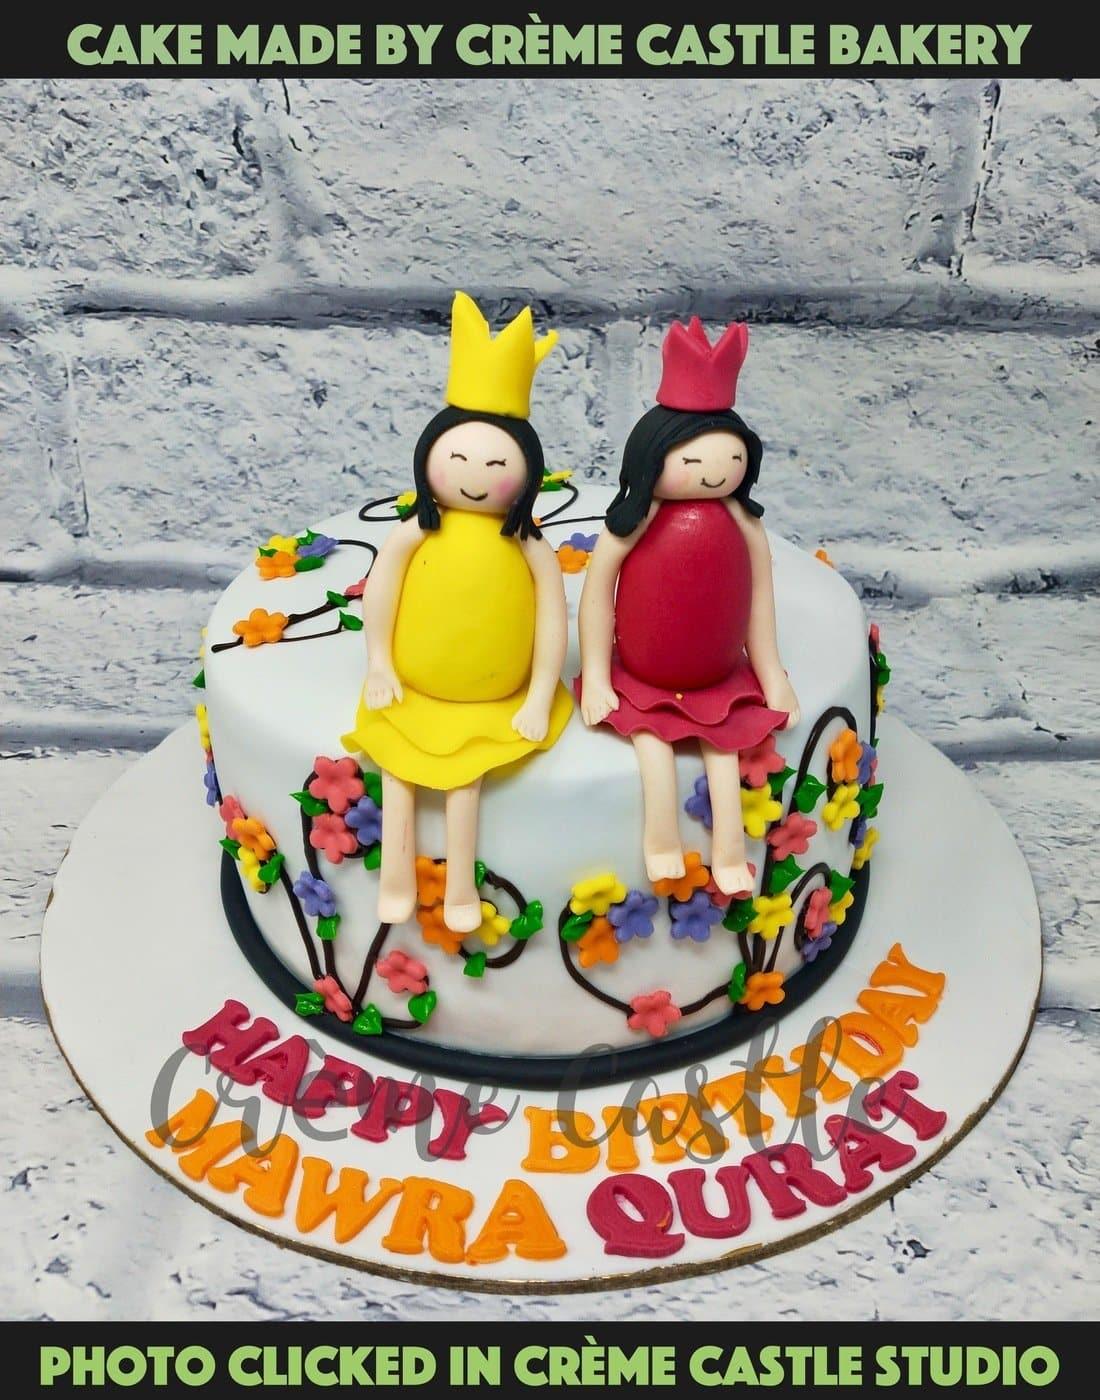 3D Girls Birthday Theme Cakes for Kids